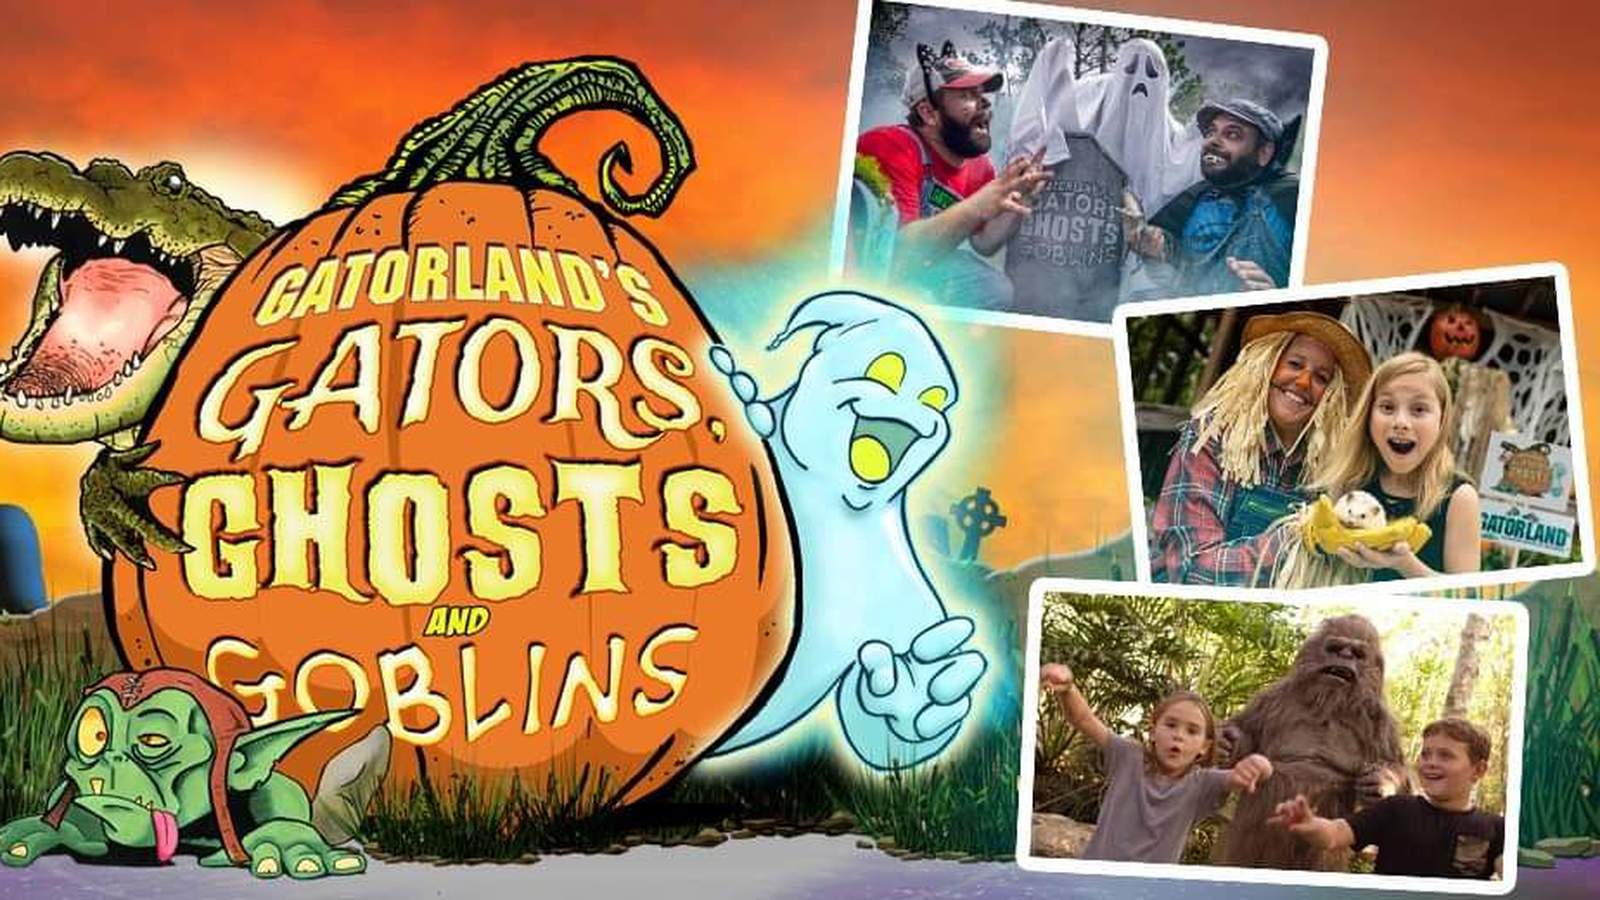 Gatorland kicks off Gators, Ghosts, and Goblins Halloween event